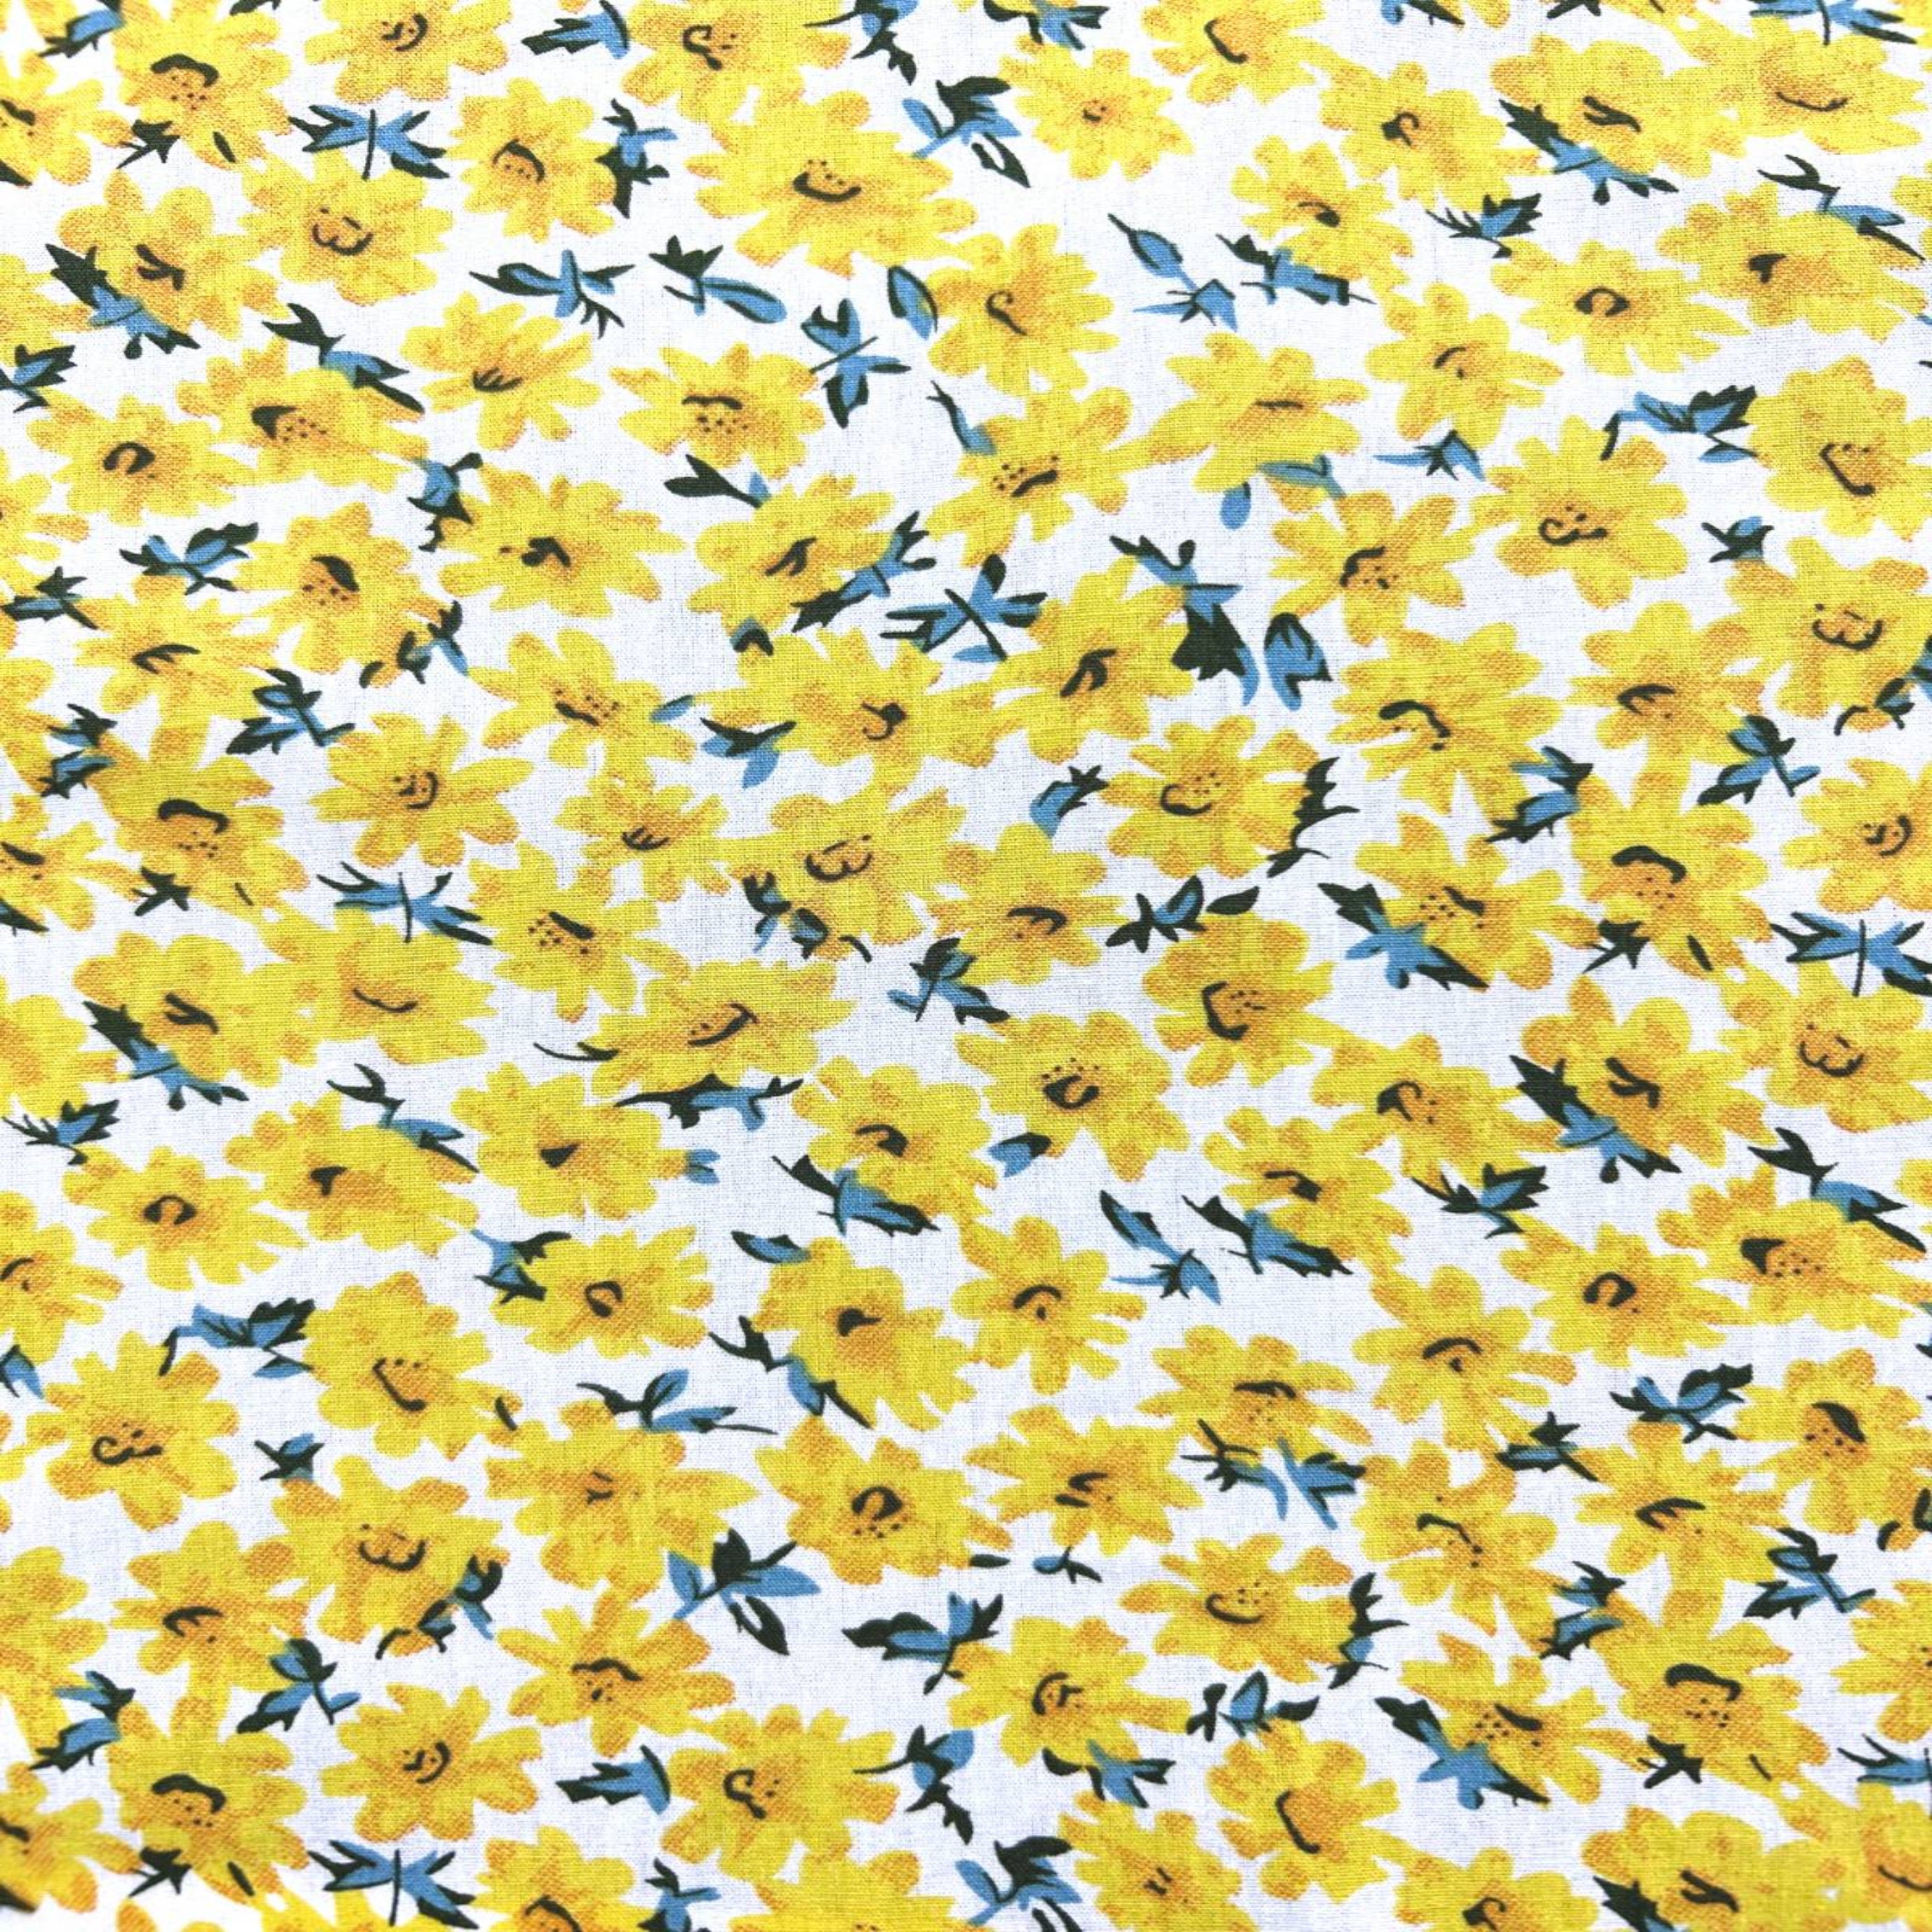 Iris Floral Cotton L/S Big Mens Shirt - Yellow